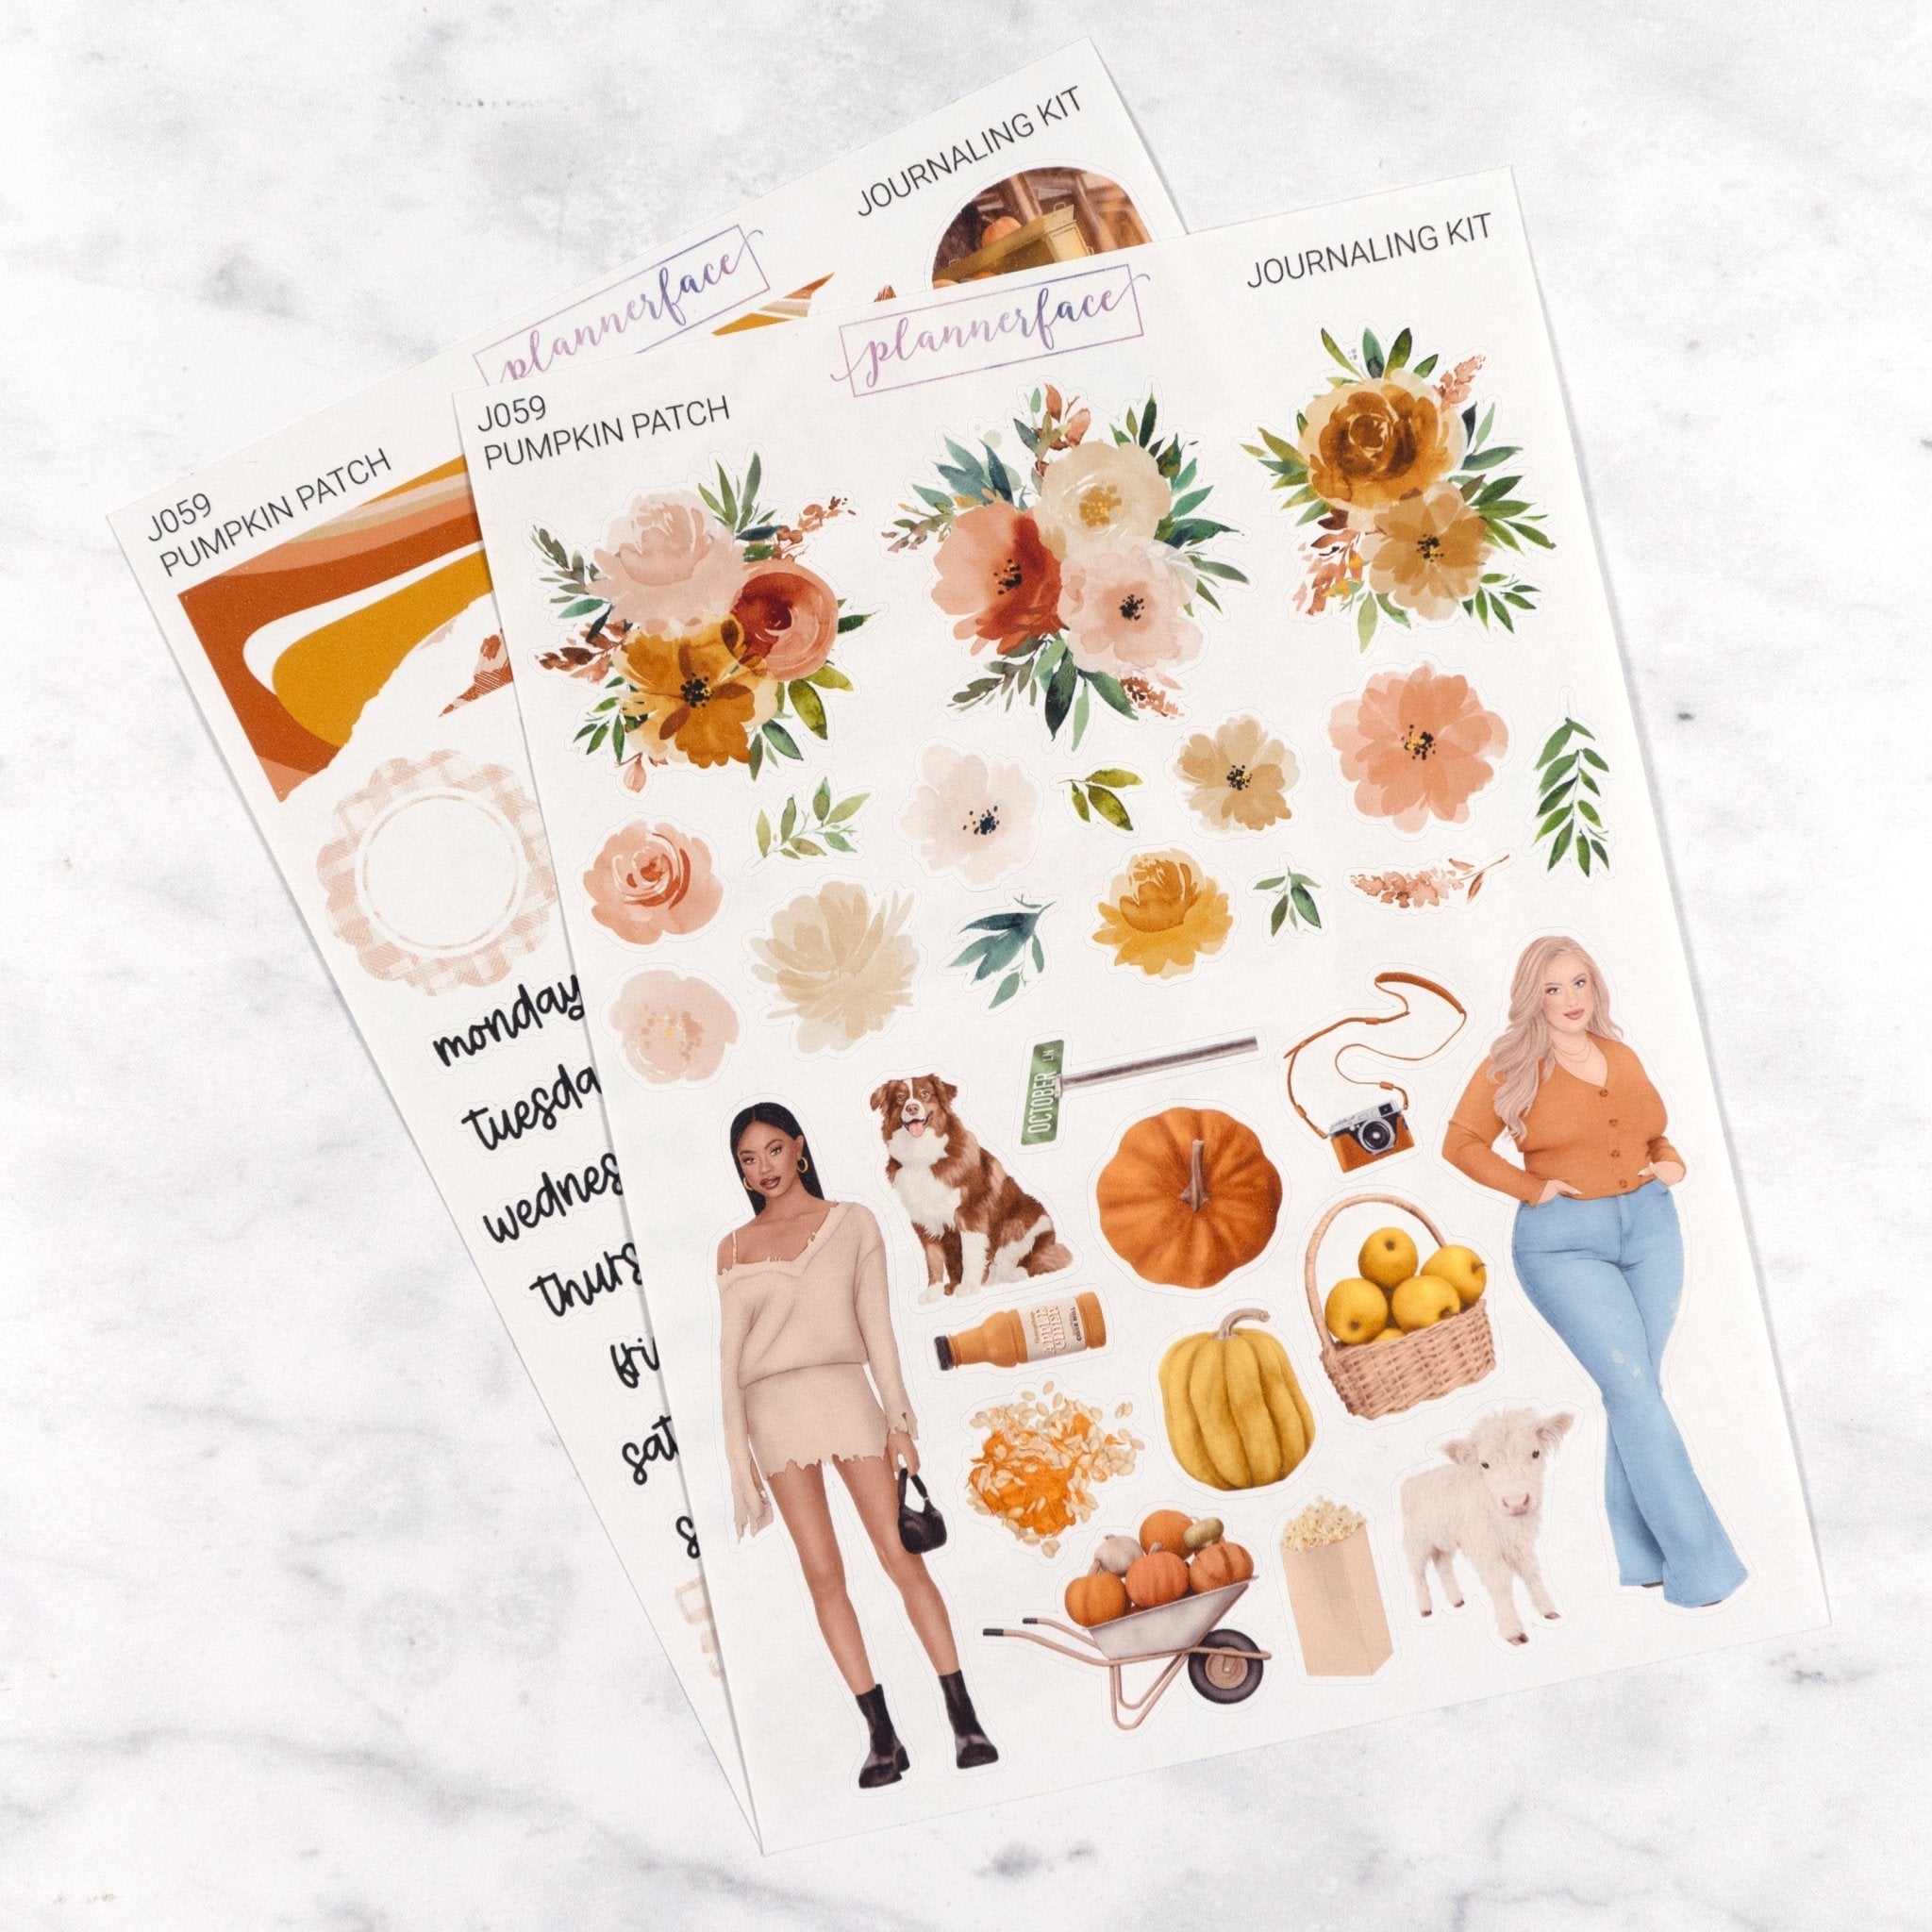 Pumpkin Patch | Journaling Kit by Plannerface